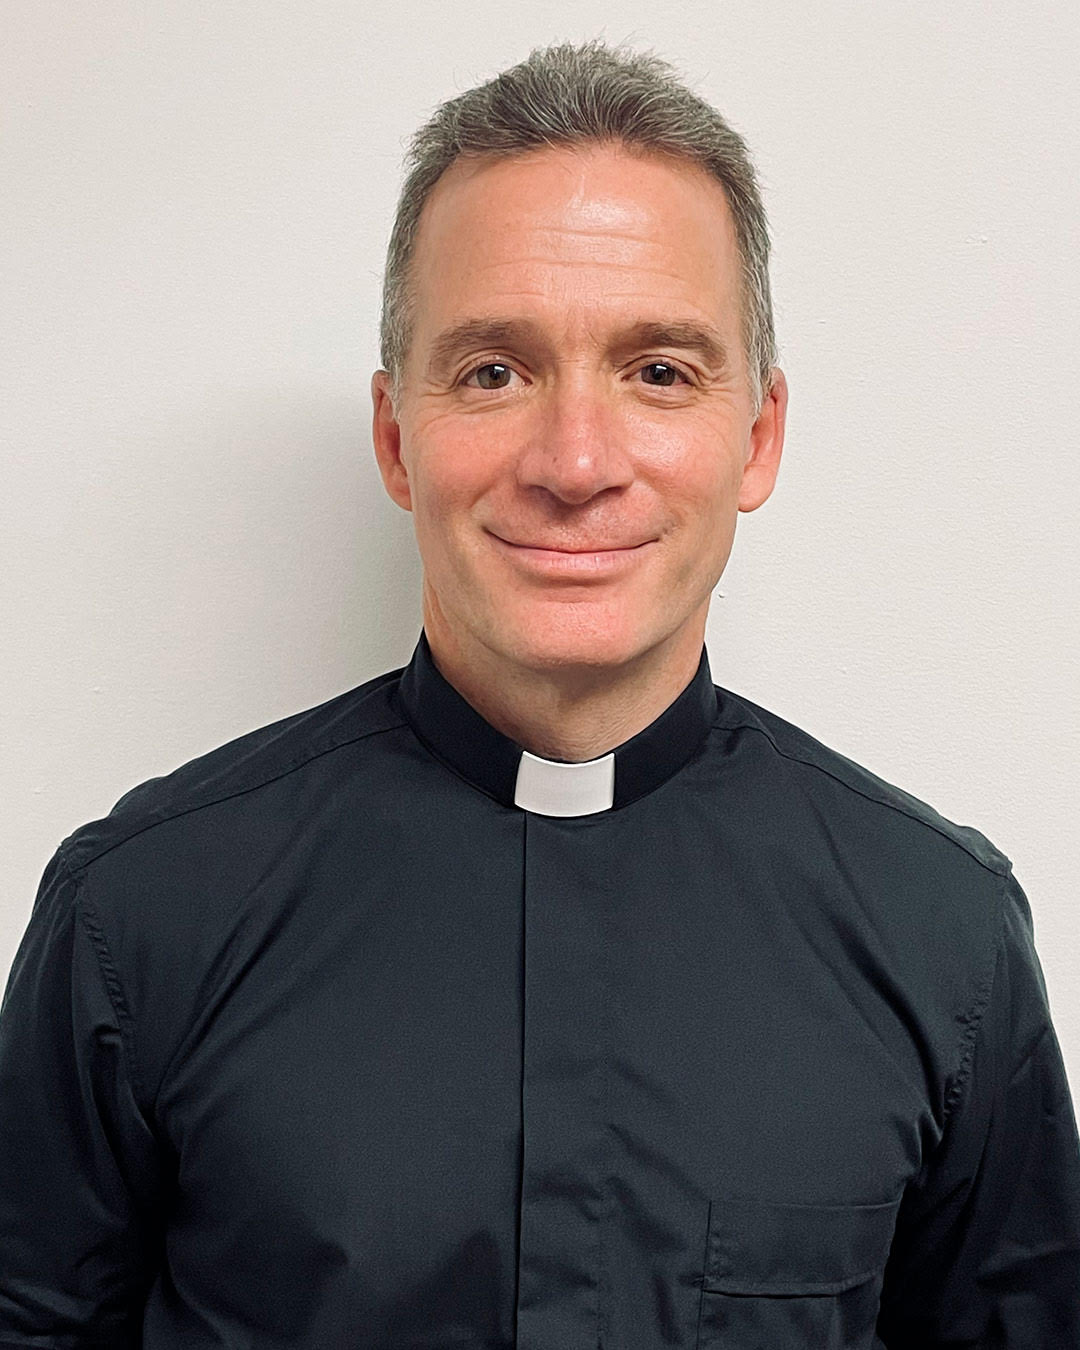 Rev. Father Dunn